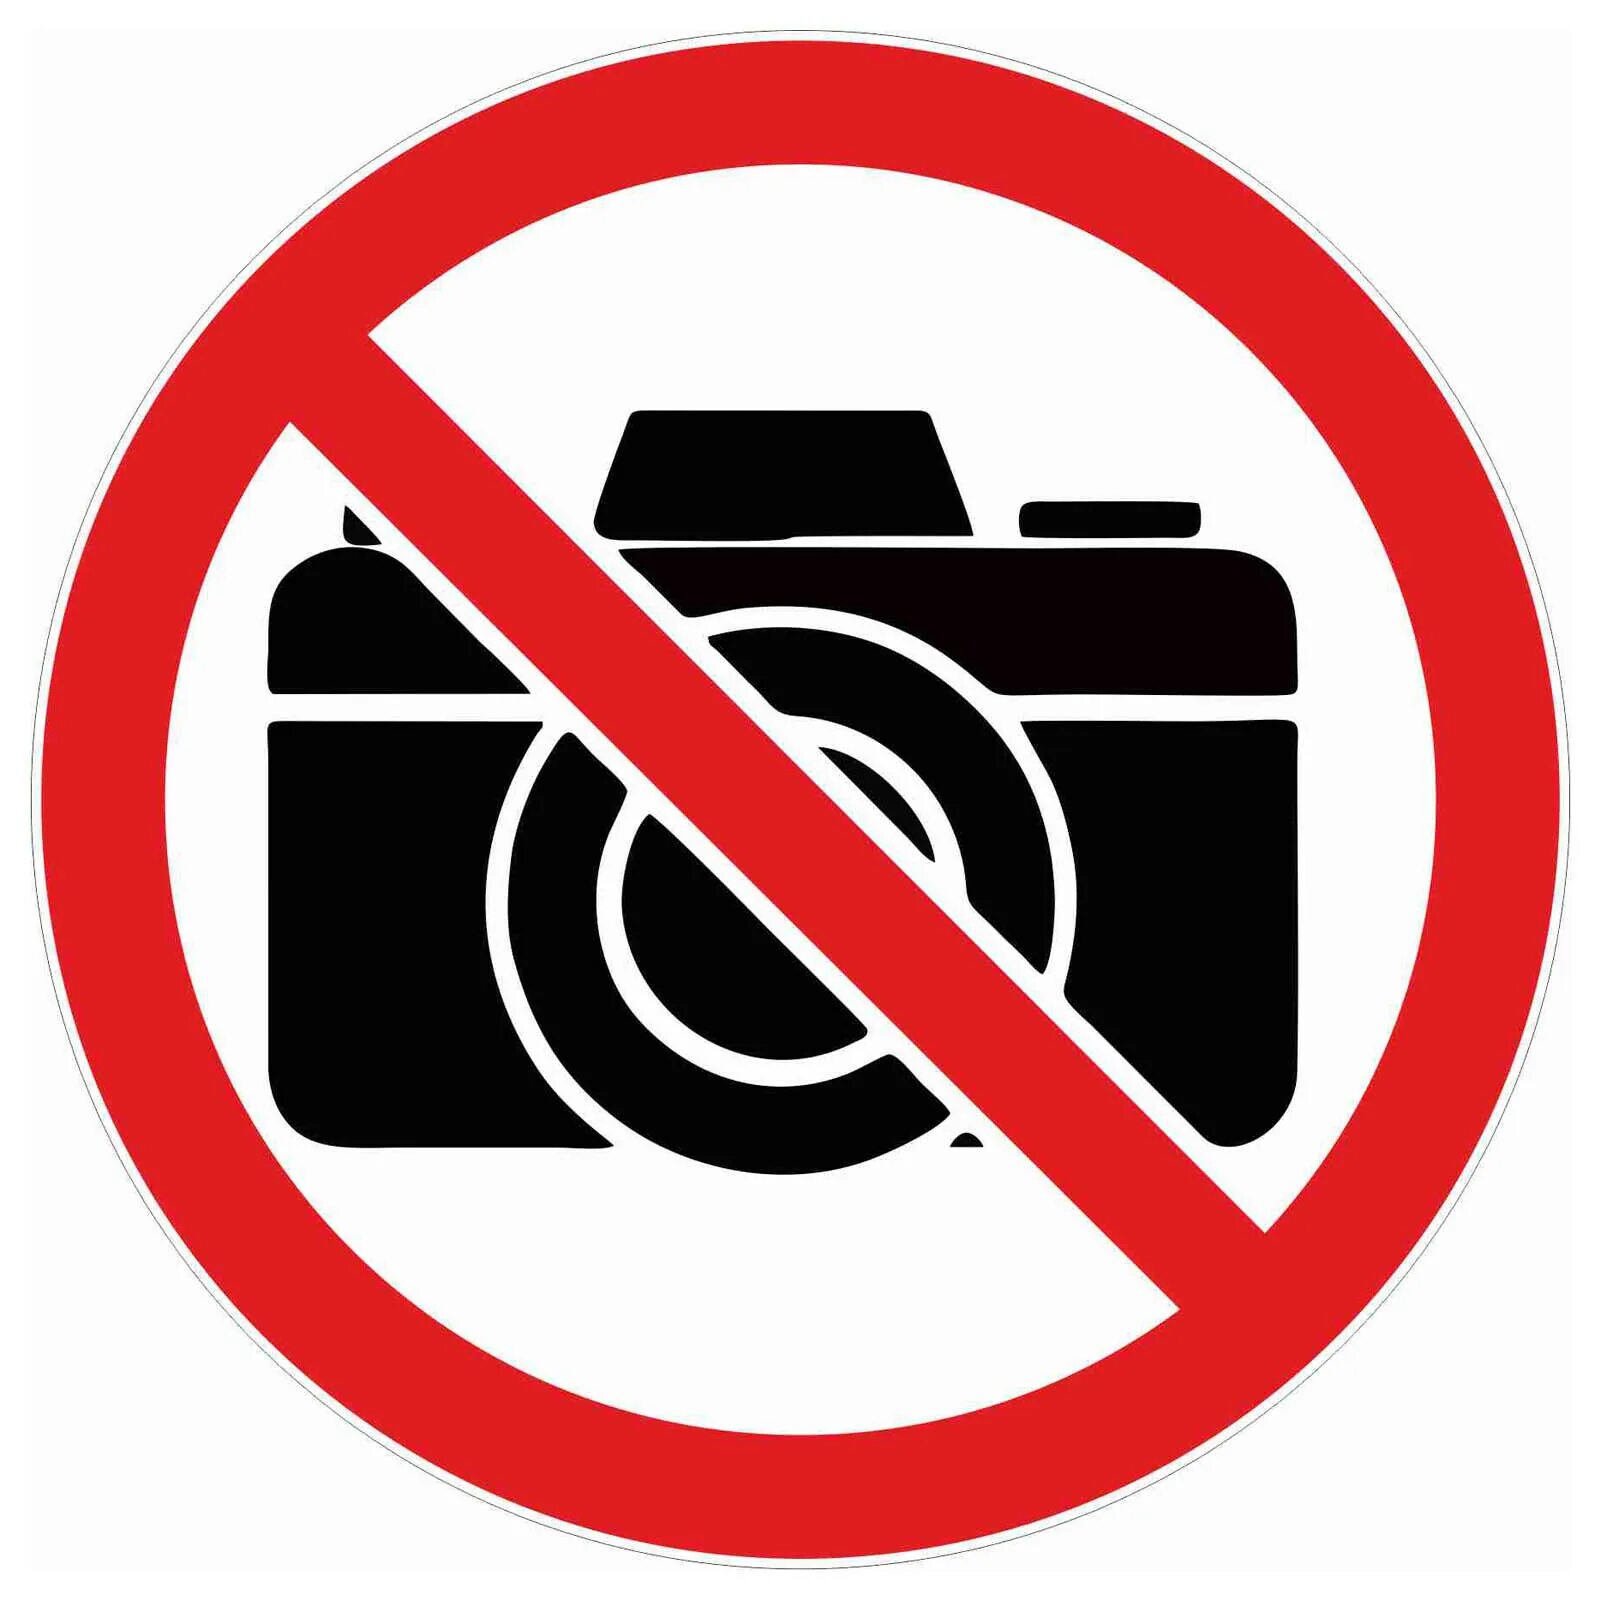 Запрещается картинки. Фотосъемка запрещена знак. Табличка съемка запрещена. Фотографировать запрещено. Фотографировать запрещено знак.